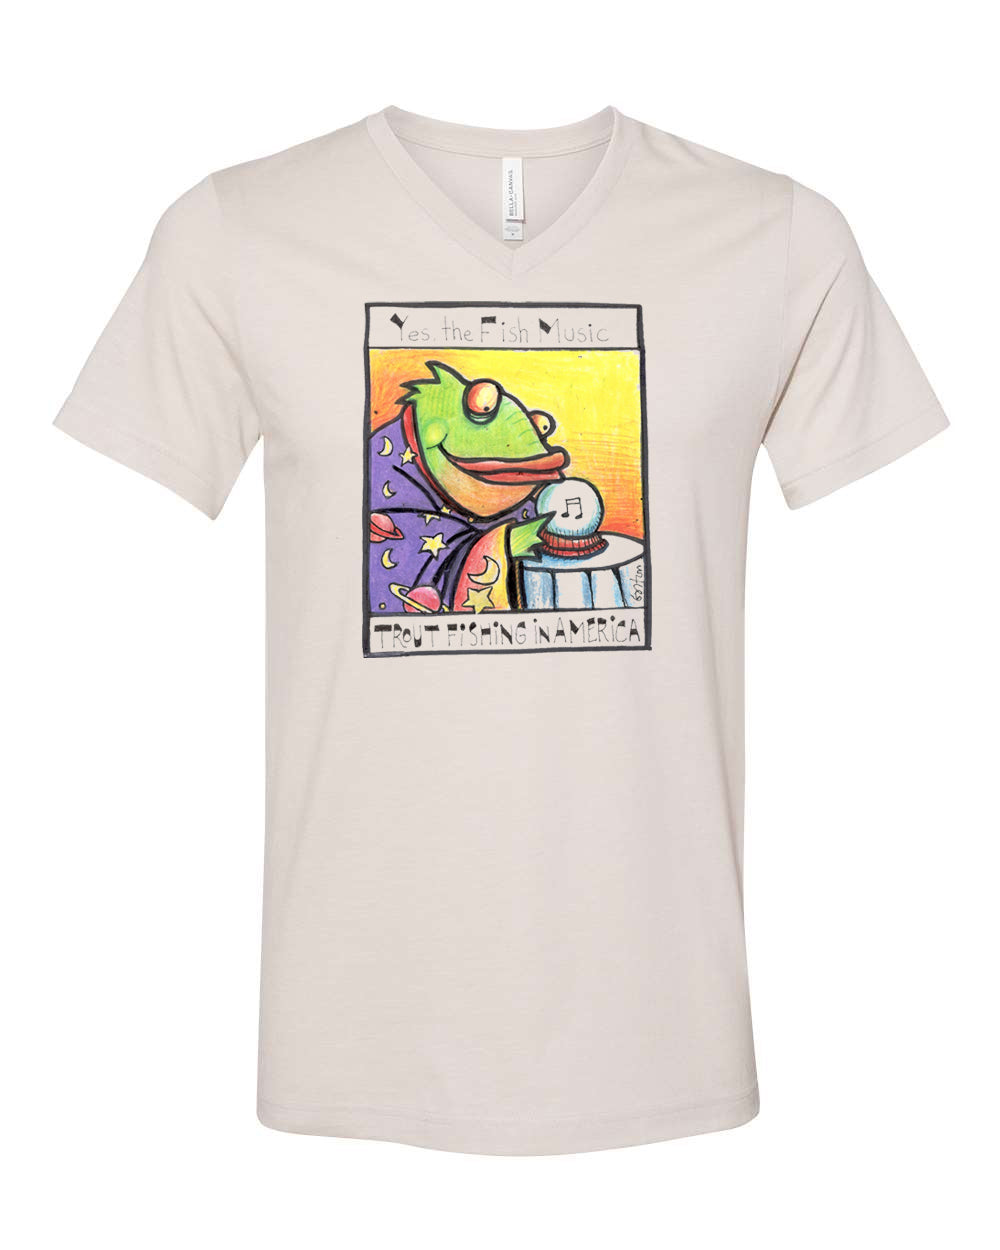 Yes, The Fish Music V-neck shirt